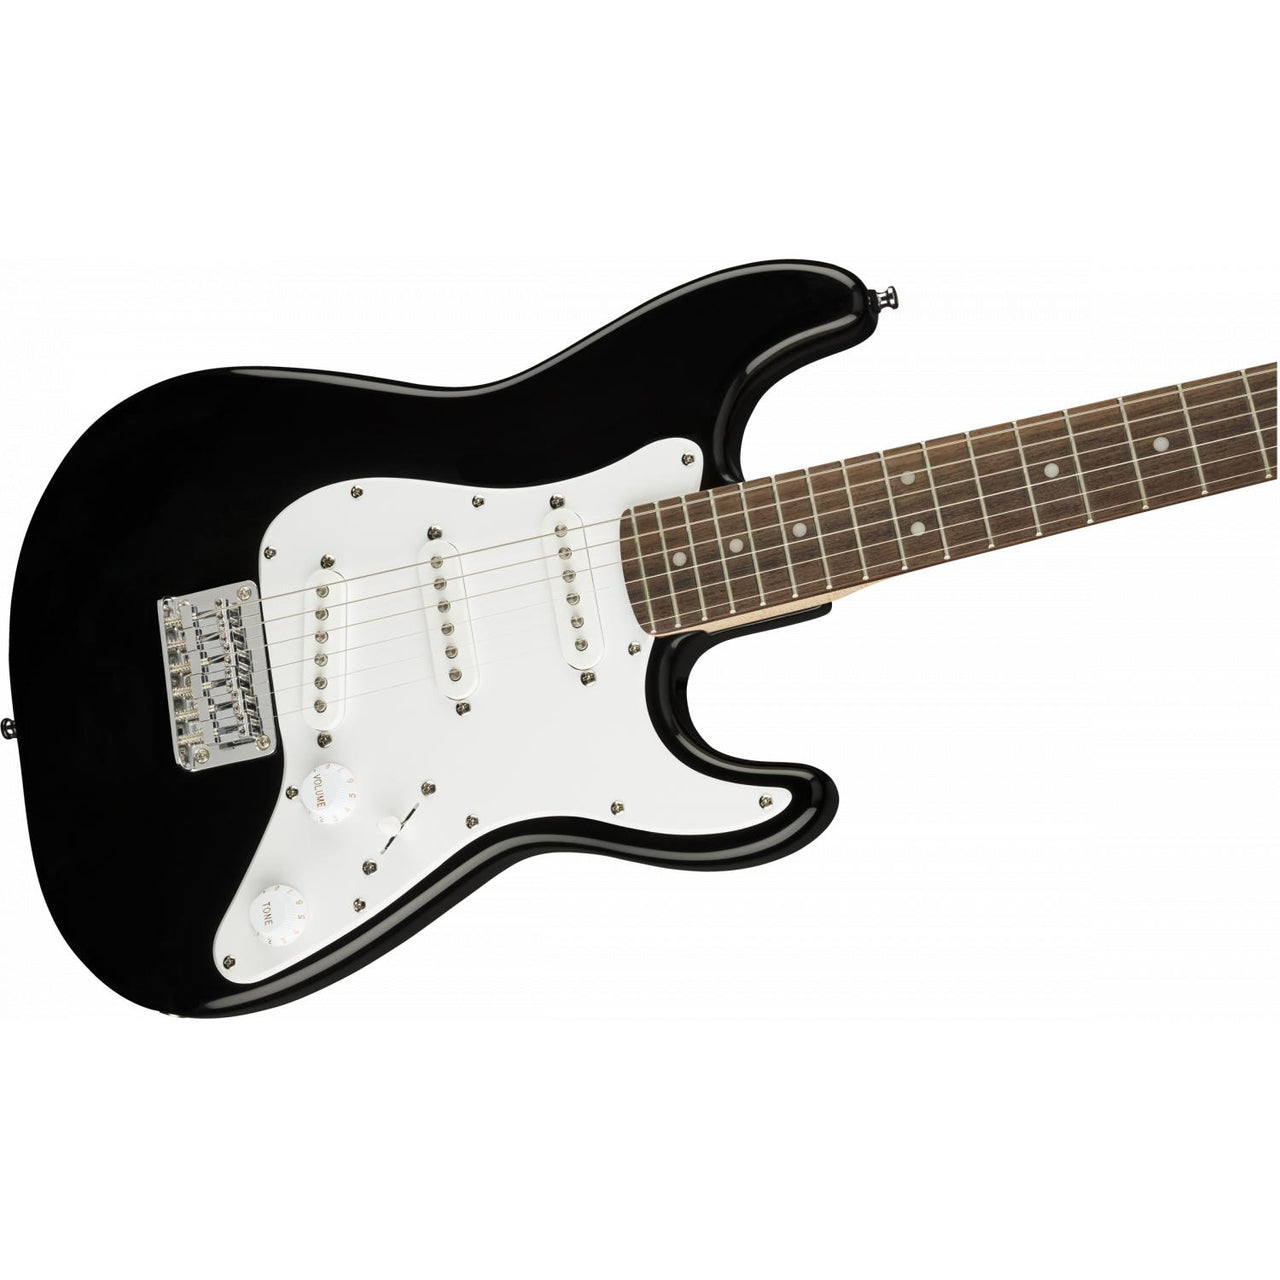 Guitarra Electrica Fender Squier Mini Stratocaster Laurel Fingerboard Negra 0370121506